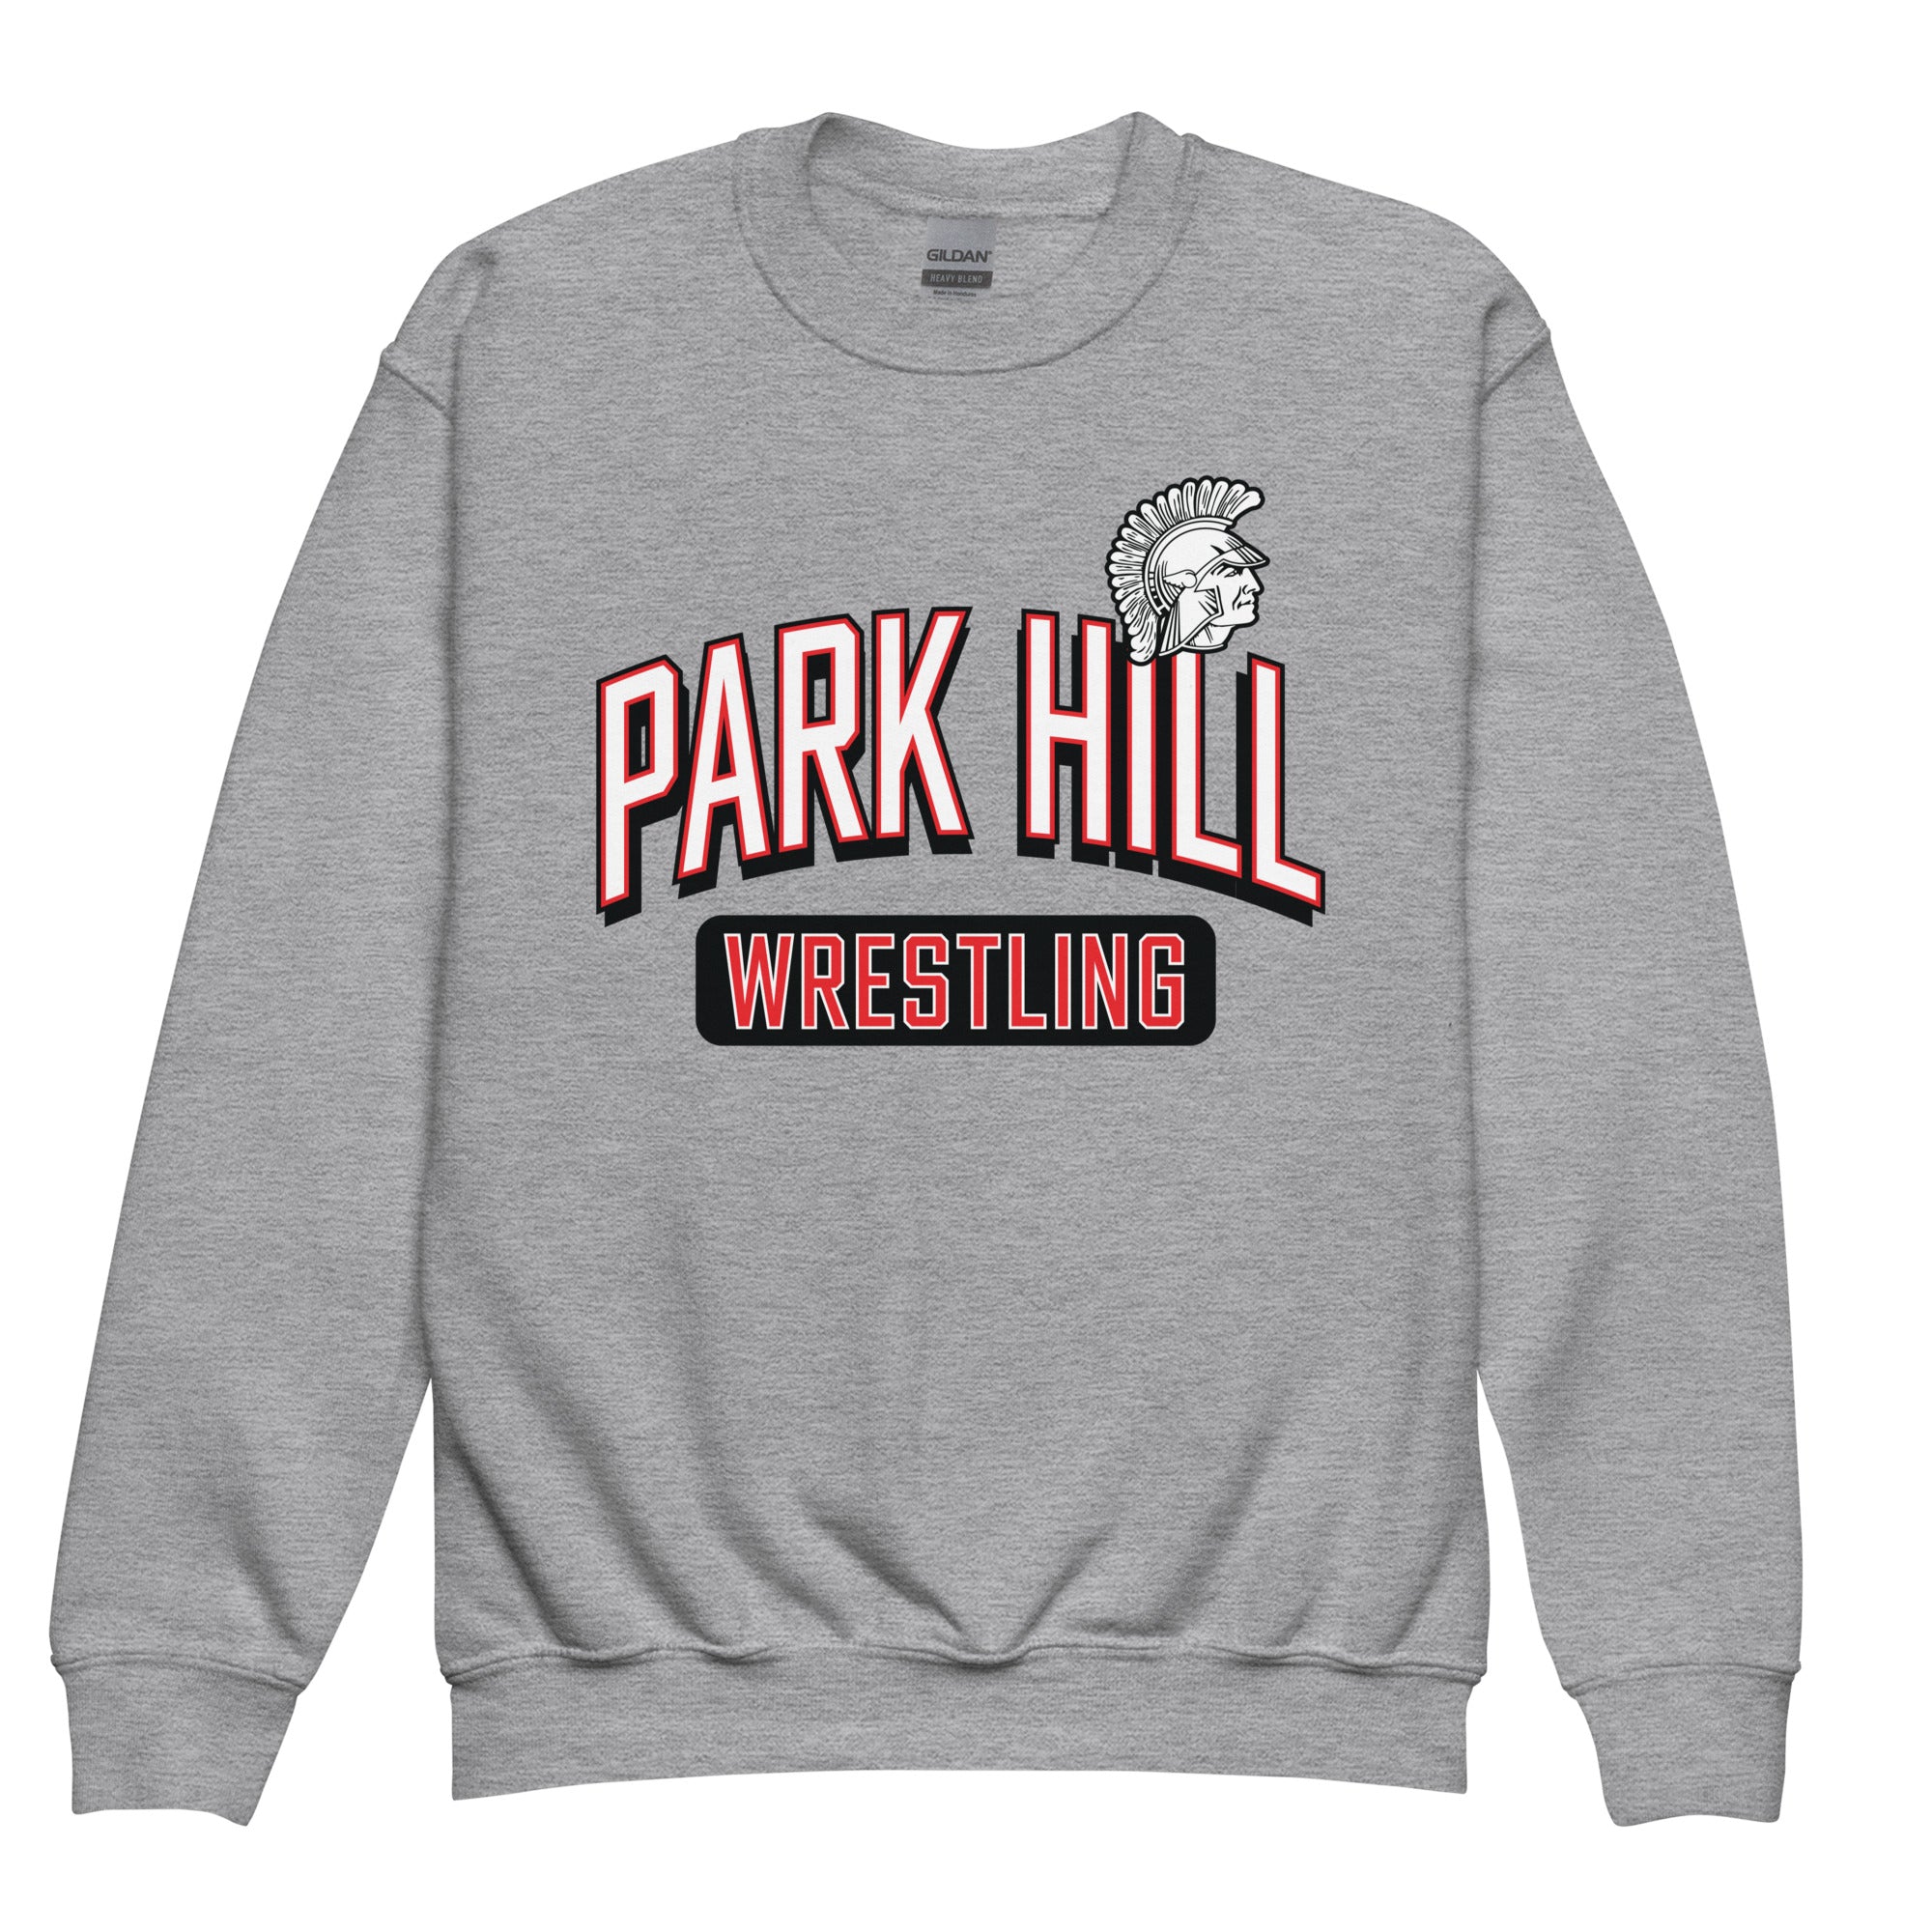 Park Hill Wrestling Youth crewneck sweatshirt